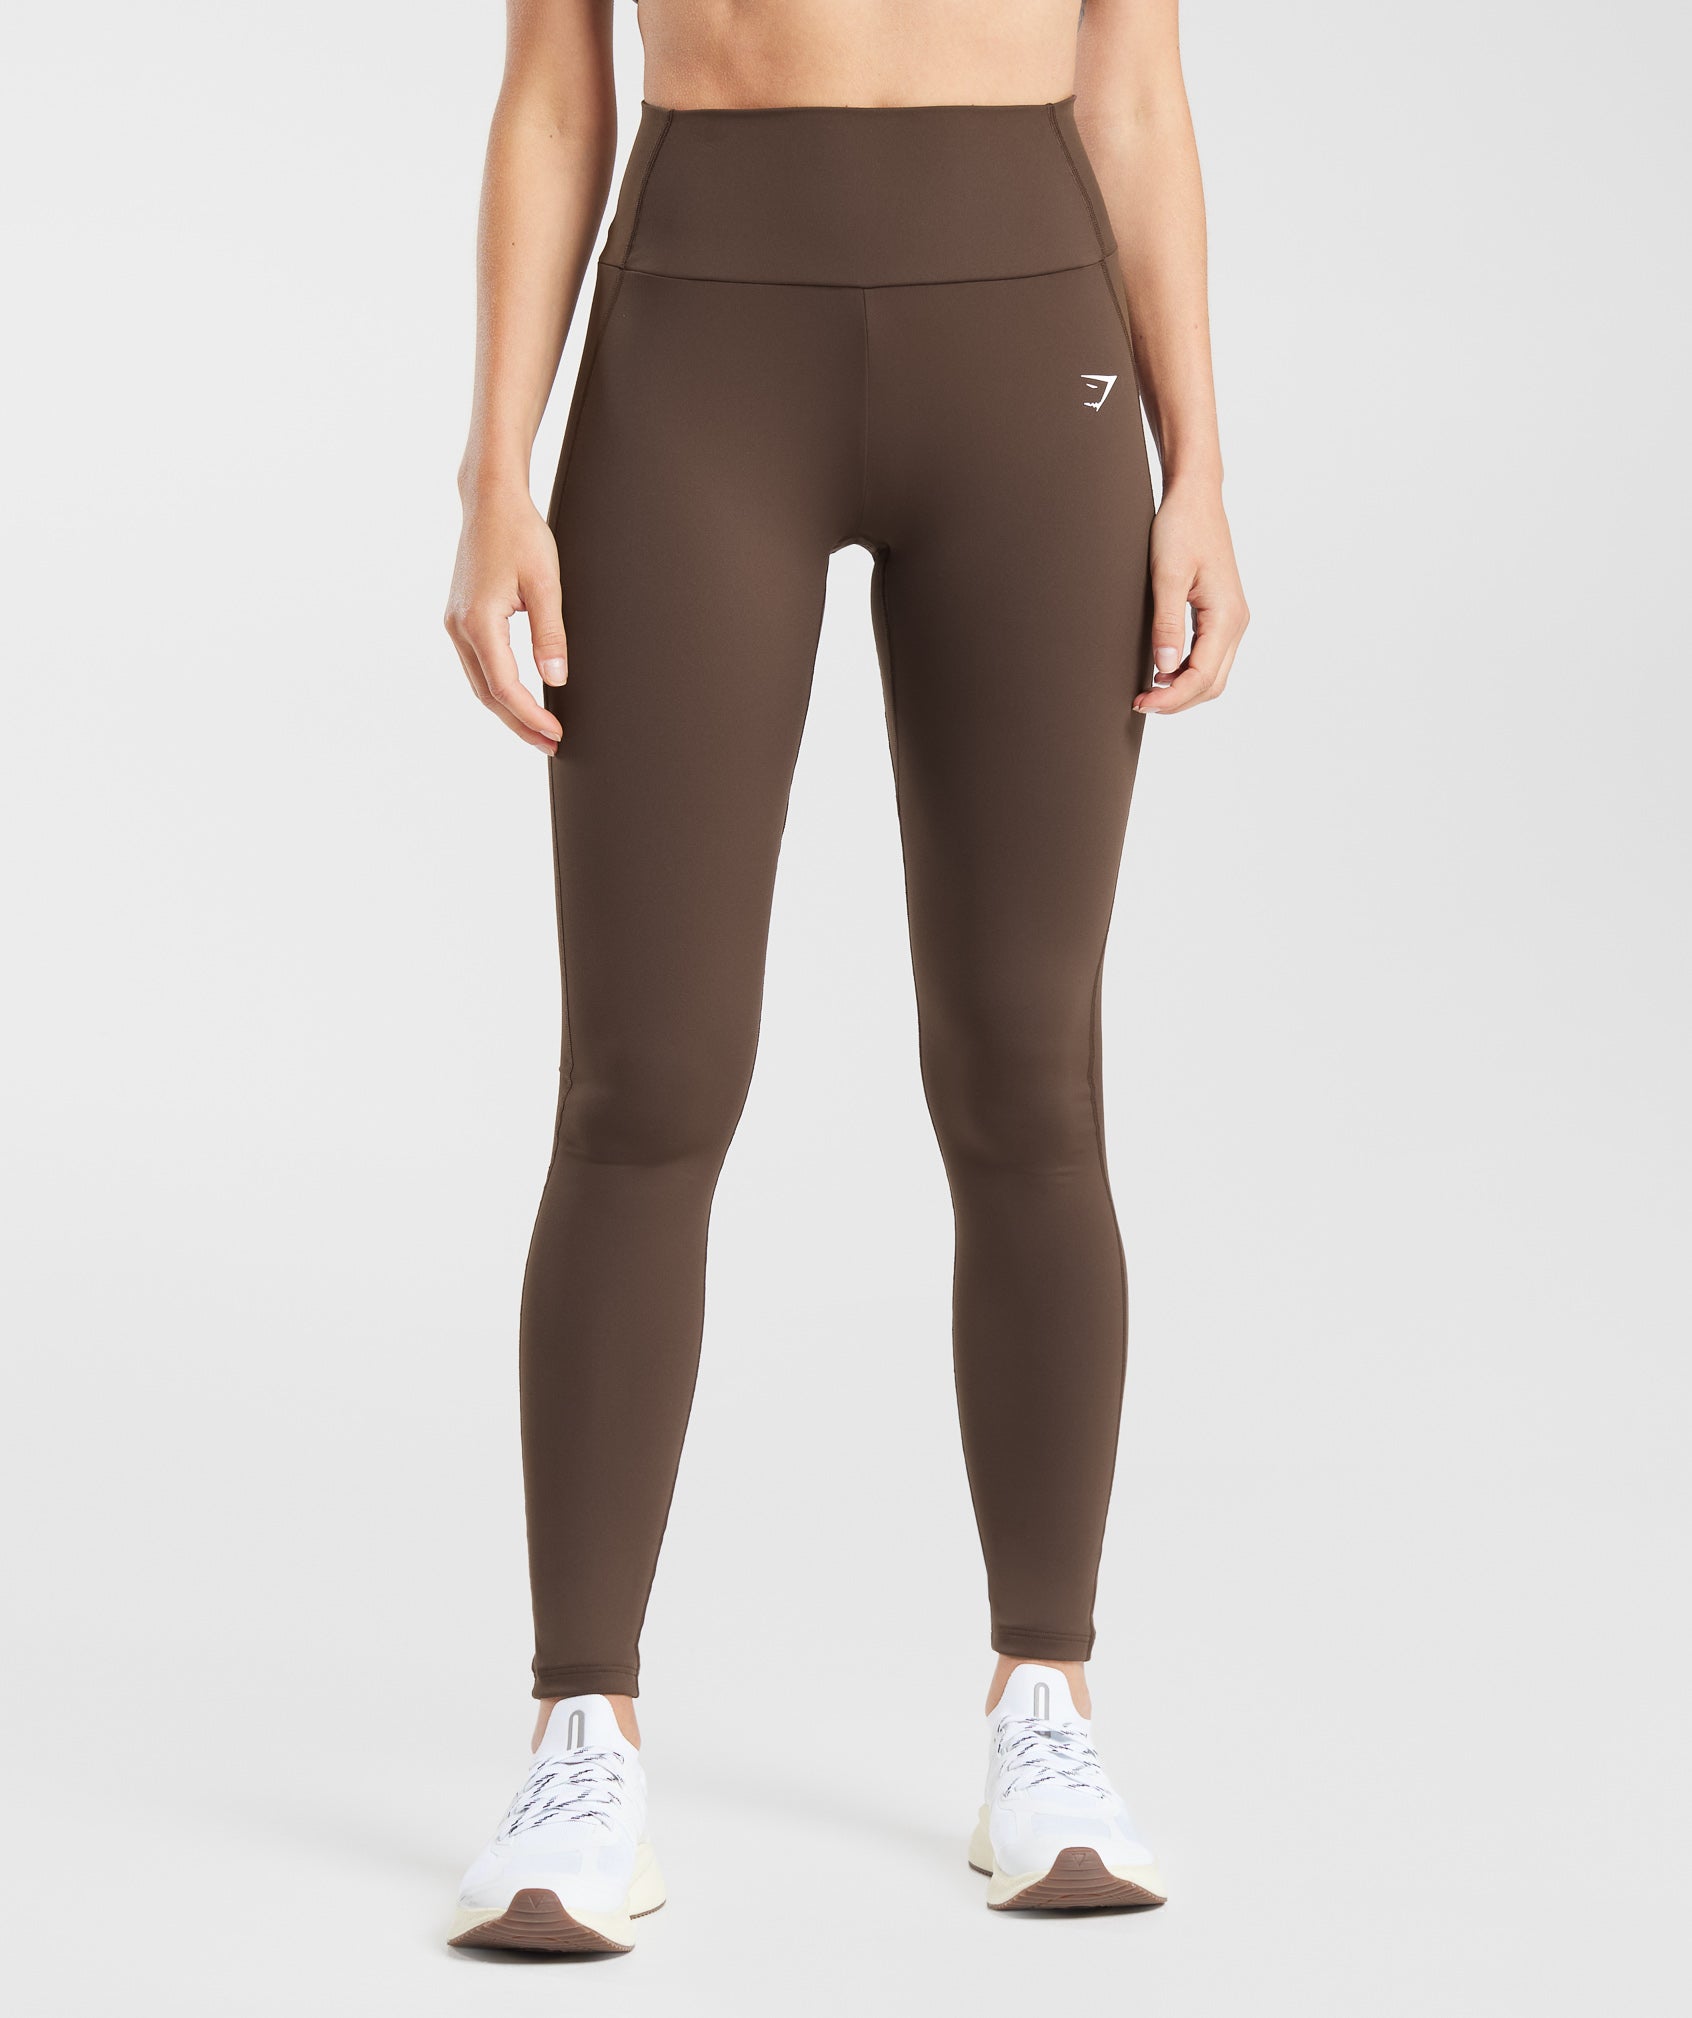 Gymshark Asymmetrical Gray Black Leggings S Small Booty Contour Colorblock  Pants